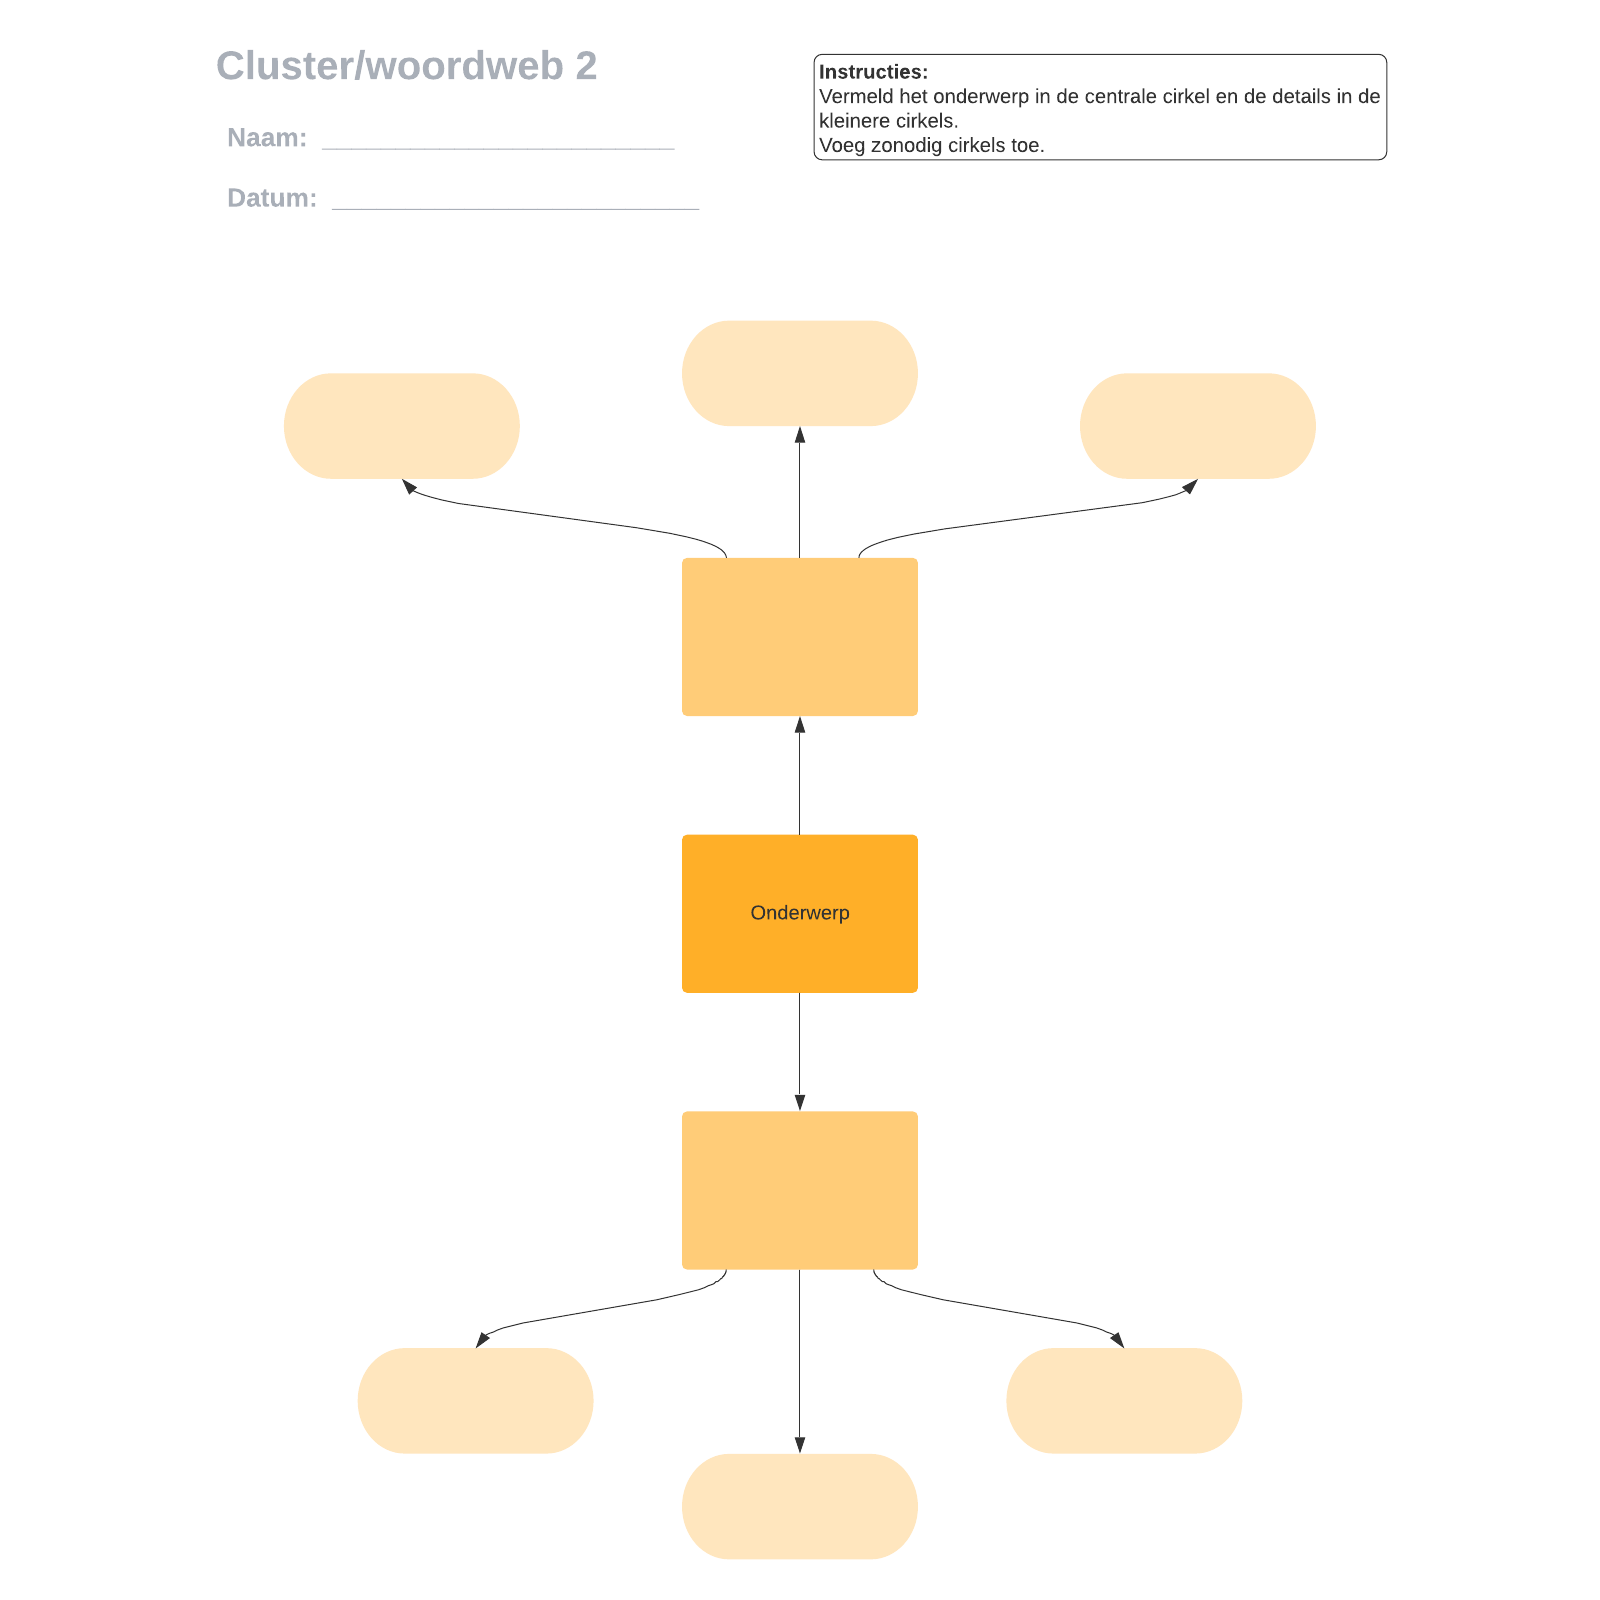 Cluster/woordweb 2 example